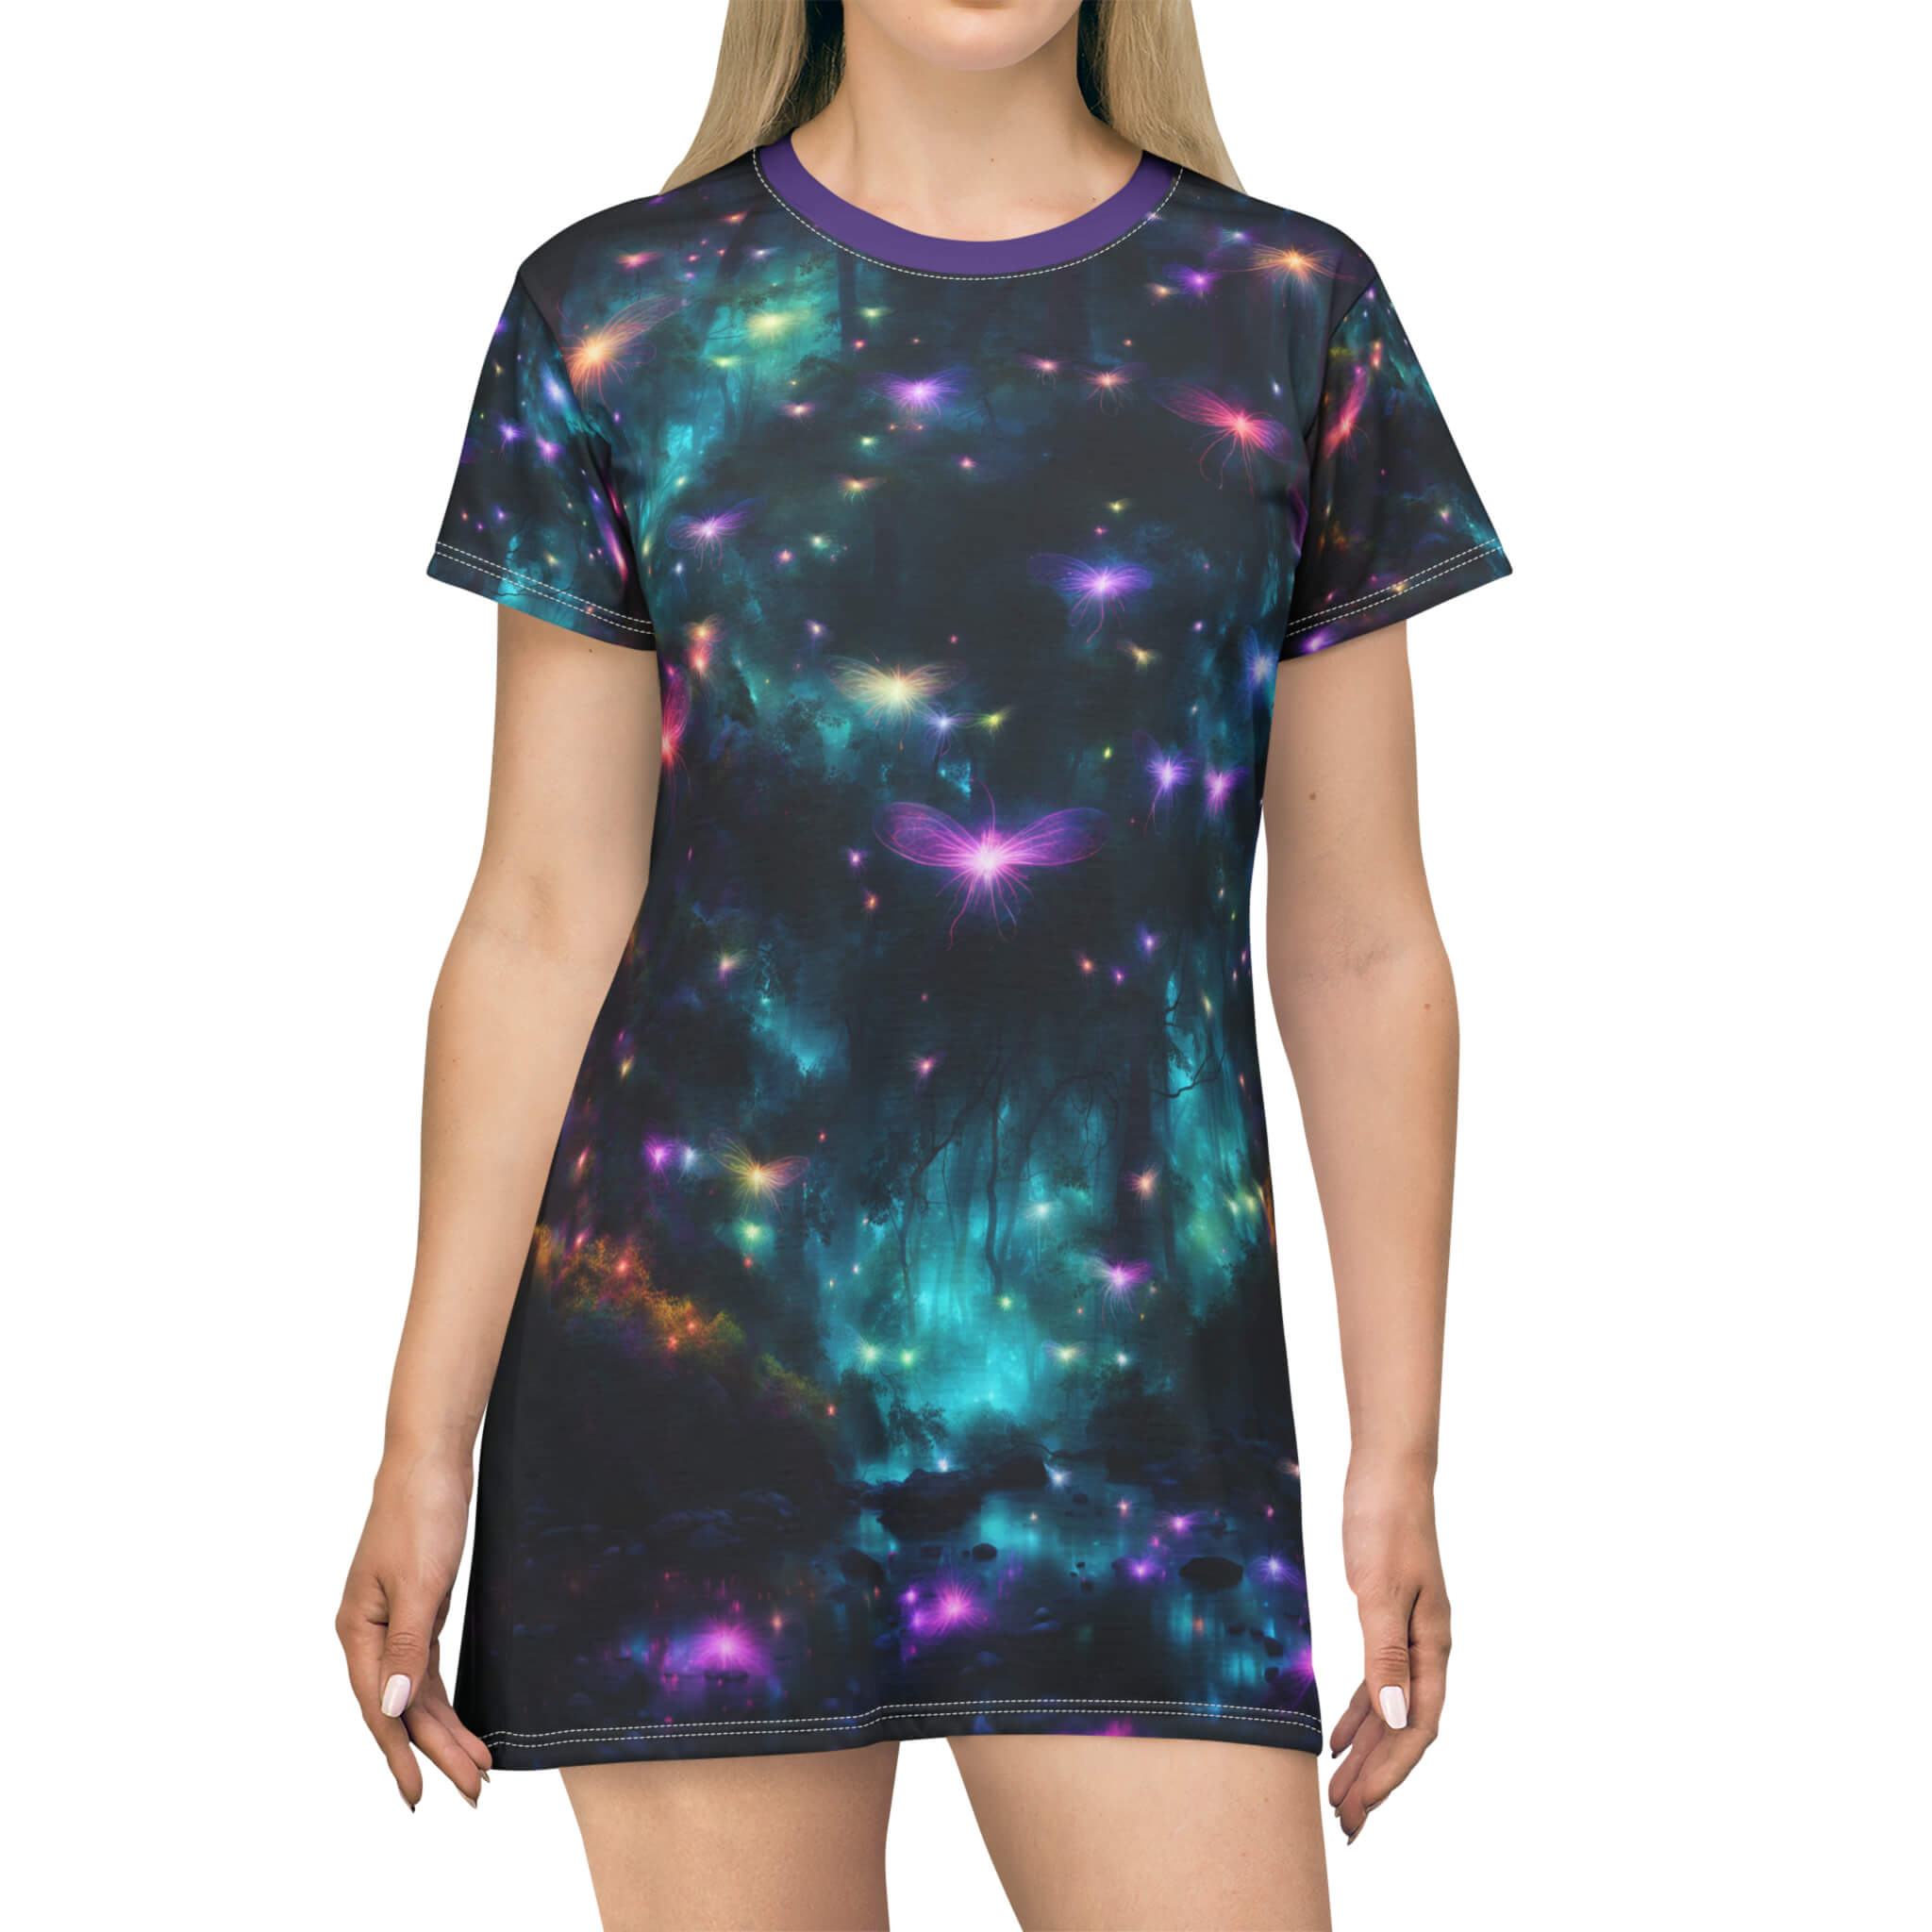 EnchantingFireflies Illuminated T-Shirt Dress